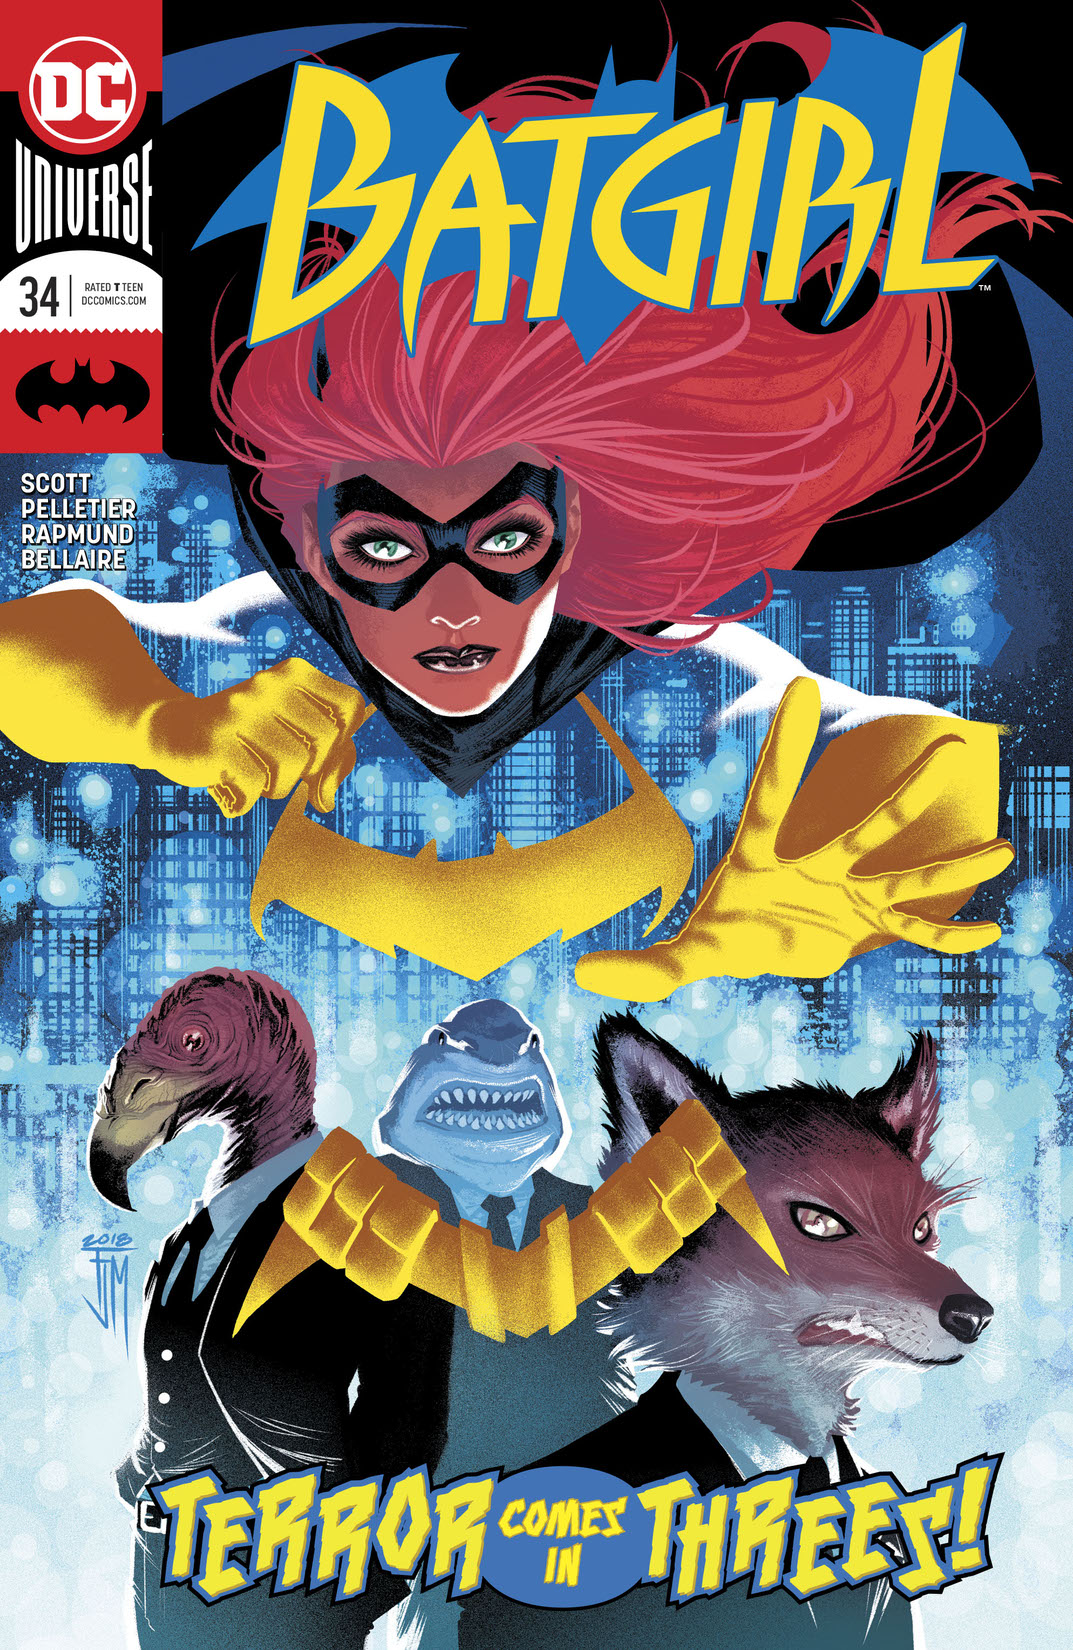 Batgirl (2016-) #34 preview images